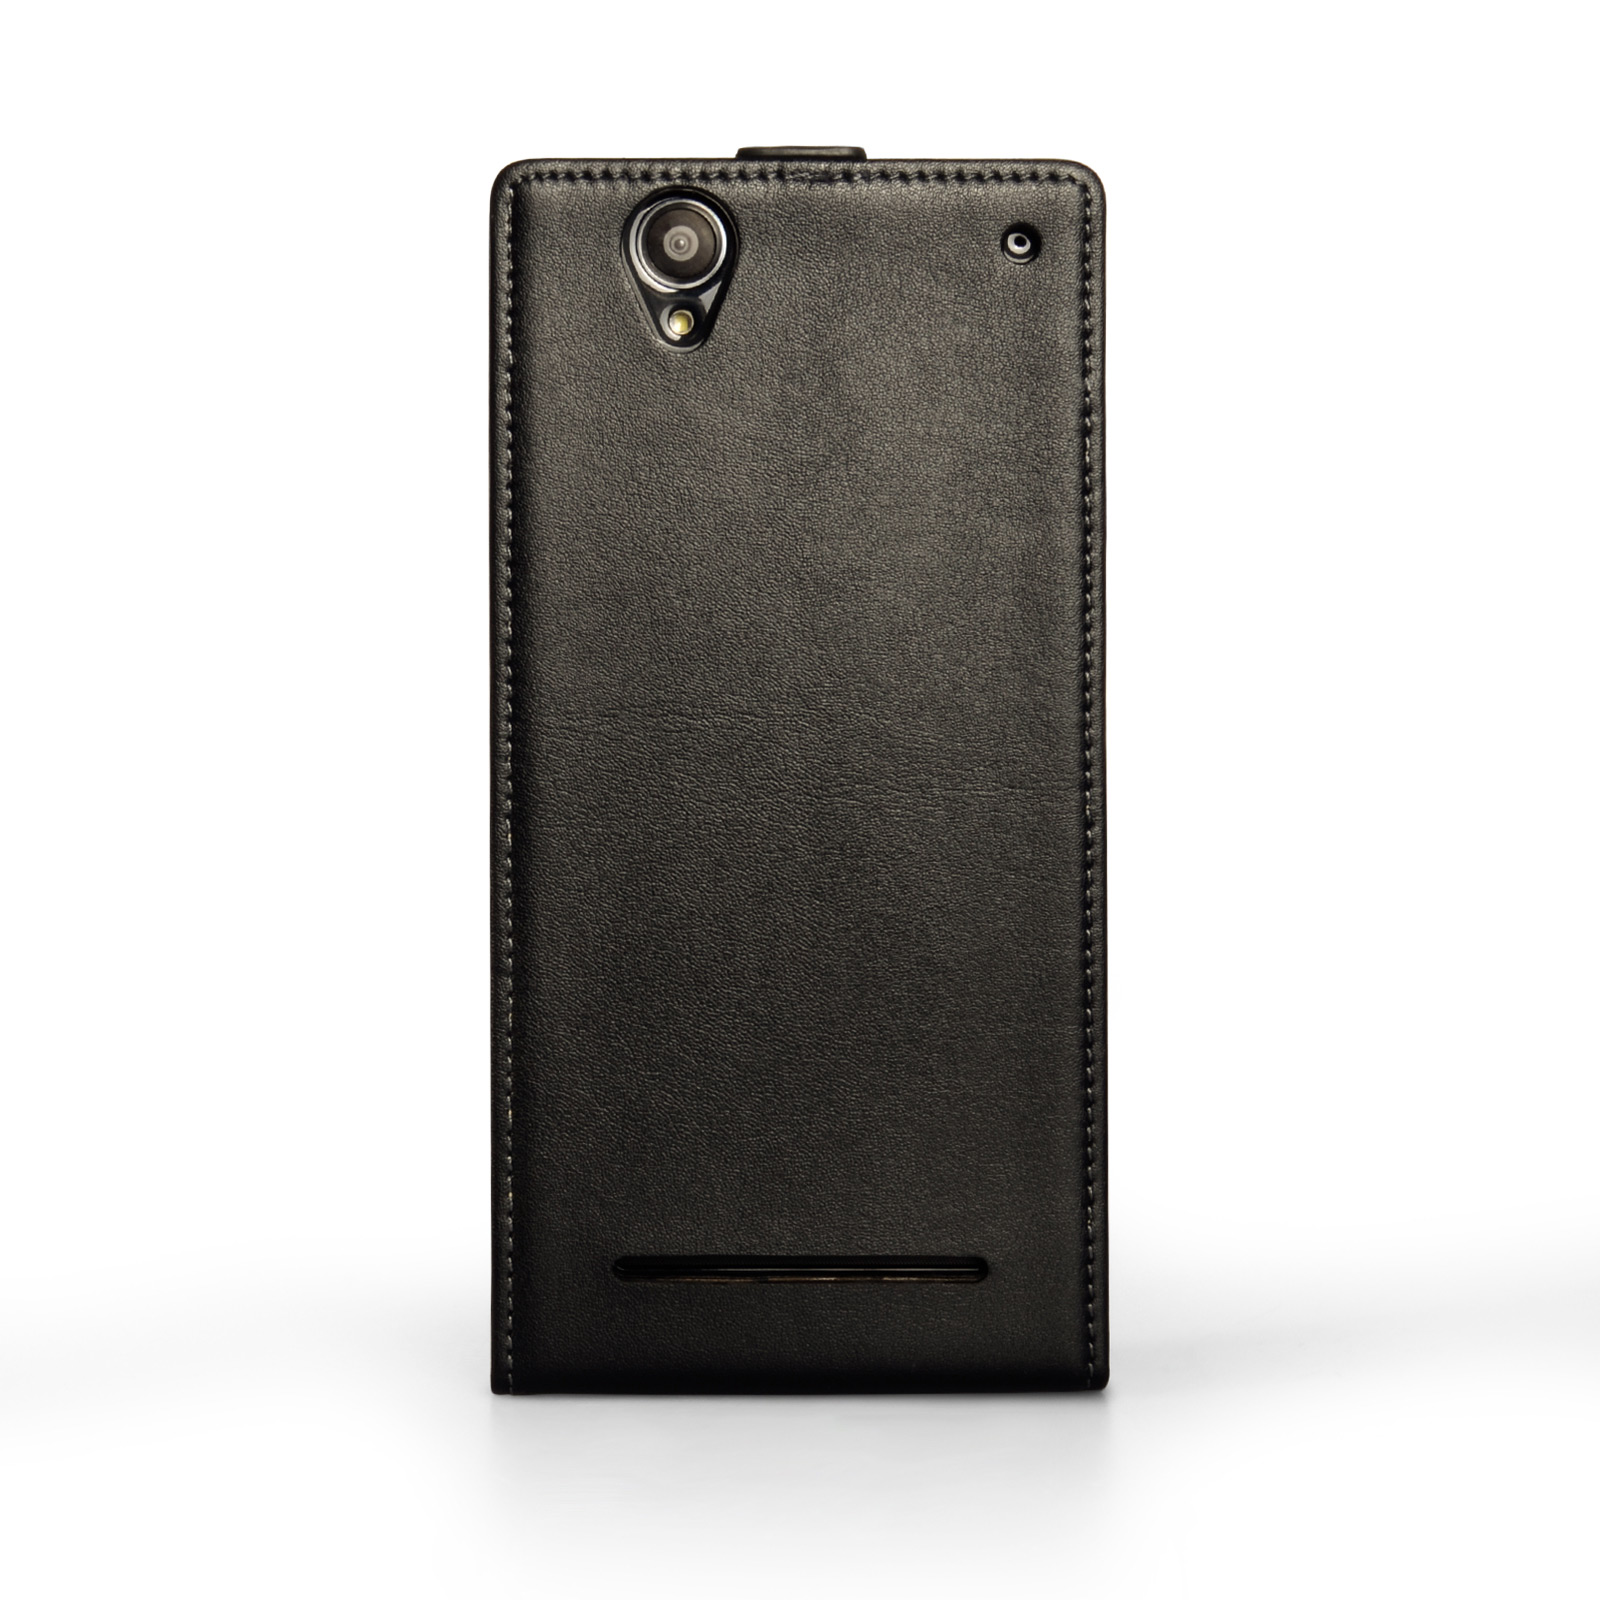 Caseflex Sony Xperia T2 Ultra Real Leather Flip Case - Black